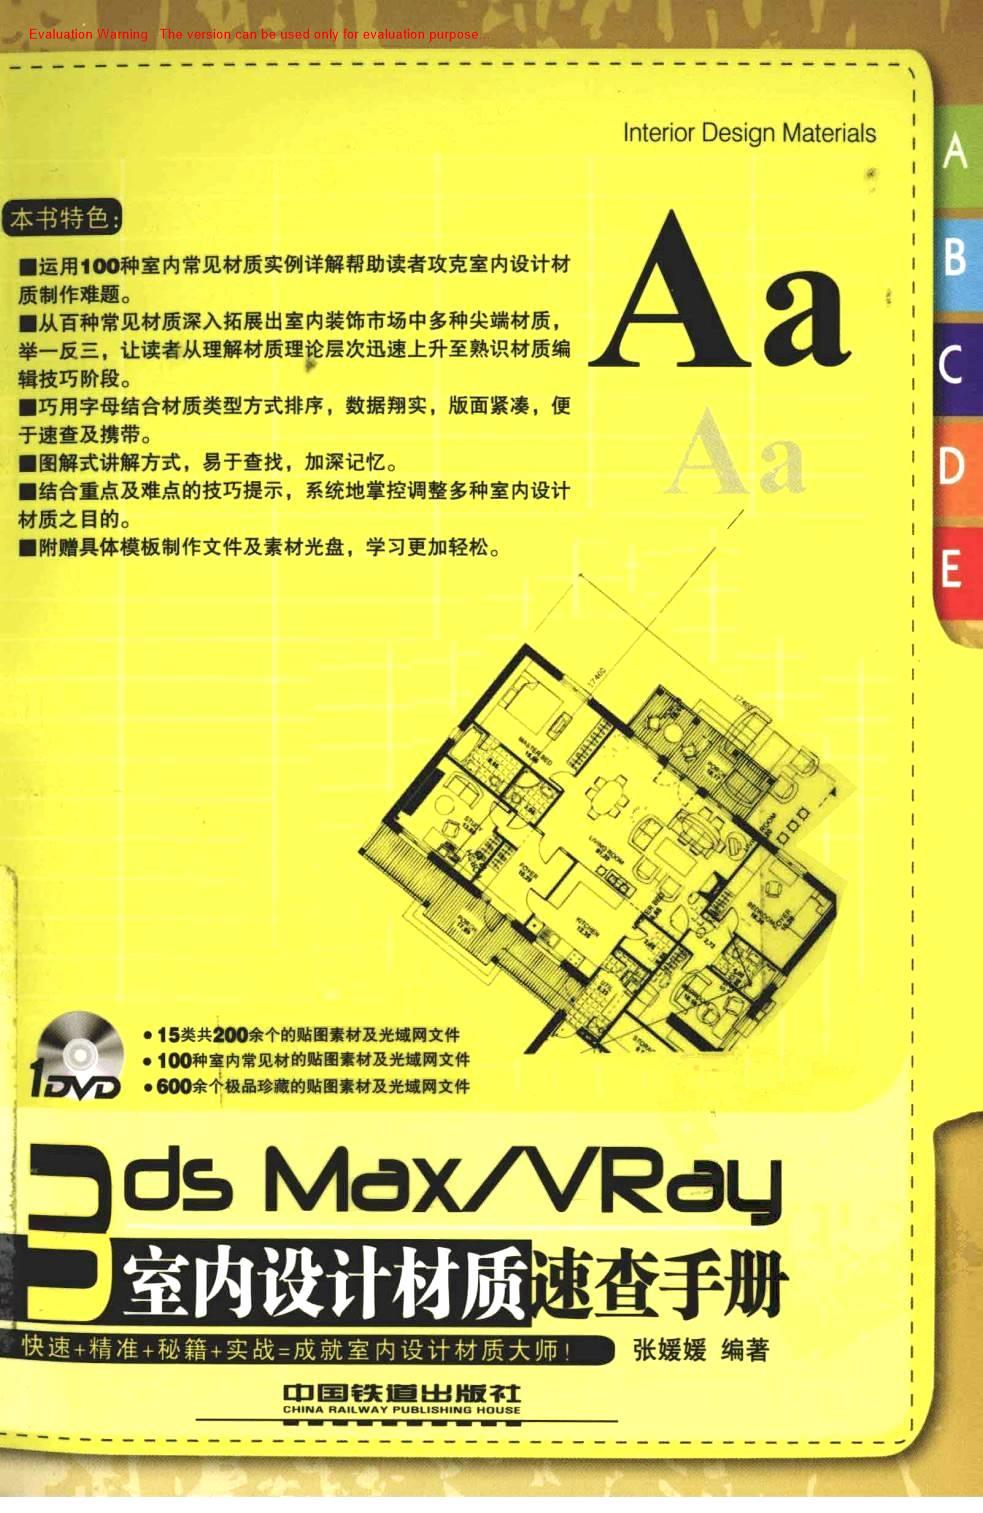 《3ds Max_VRay室内设计材质速查手册_张媛媛著》